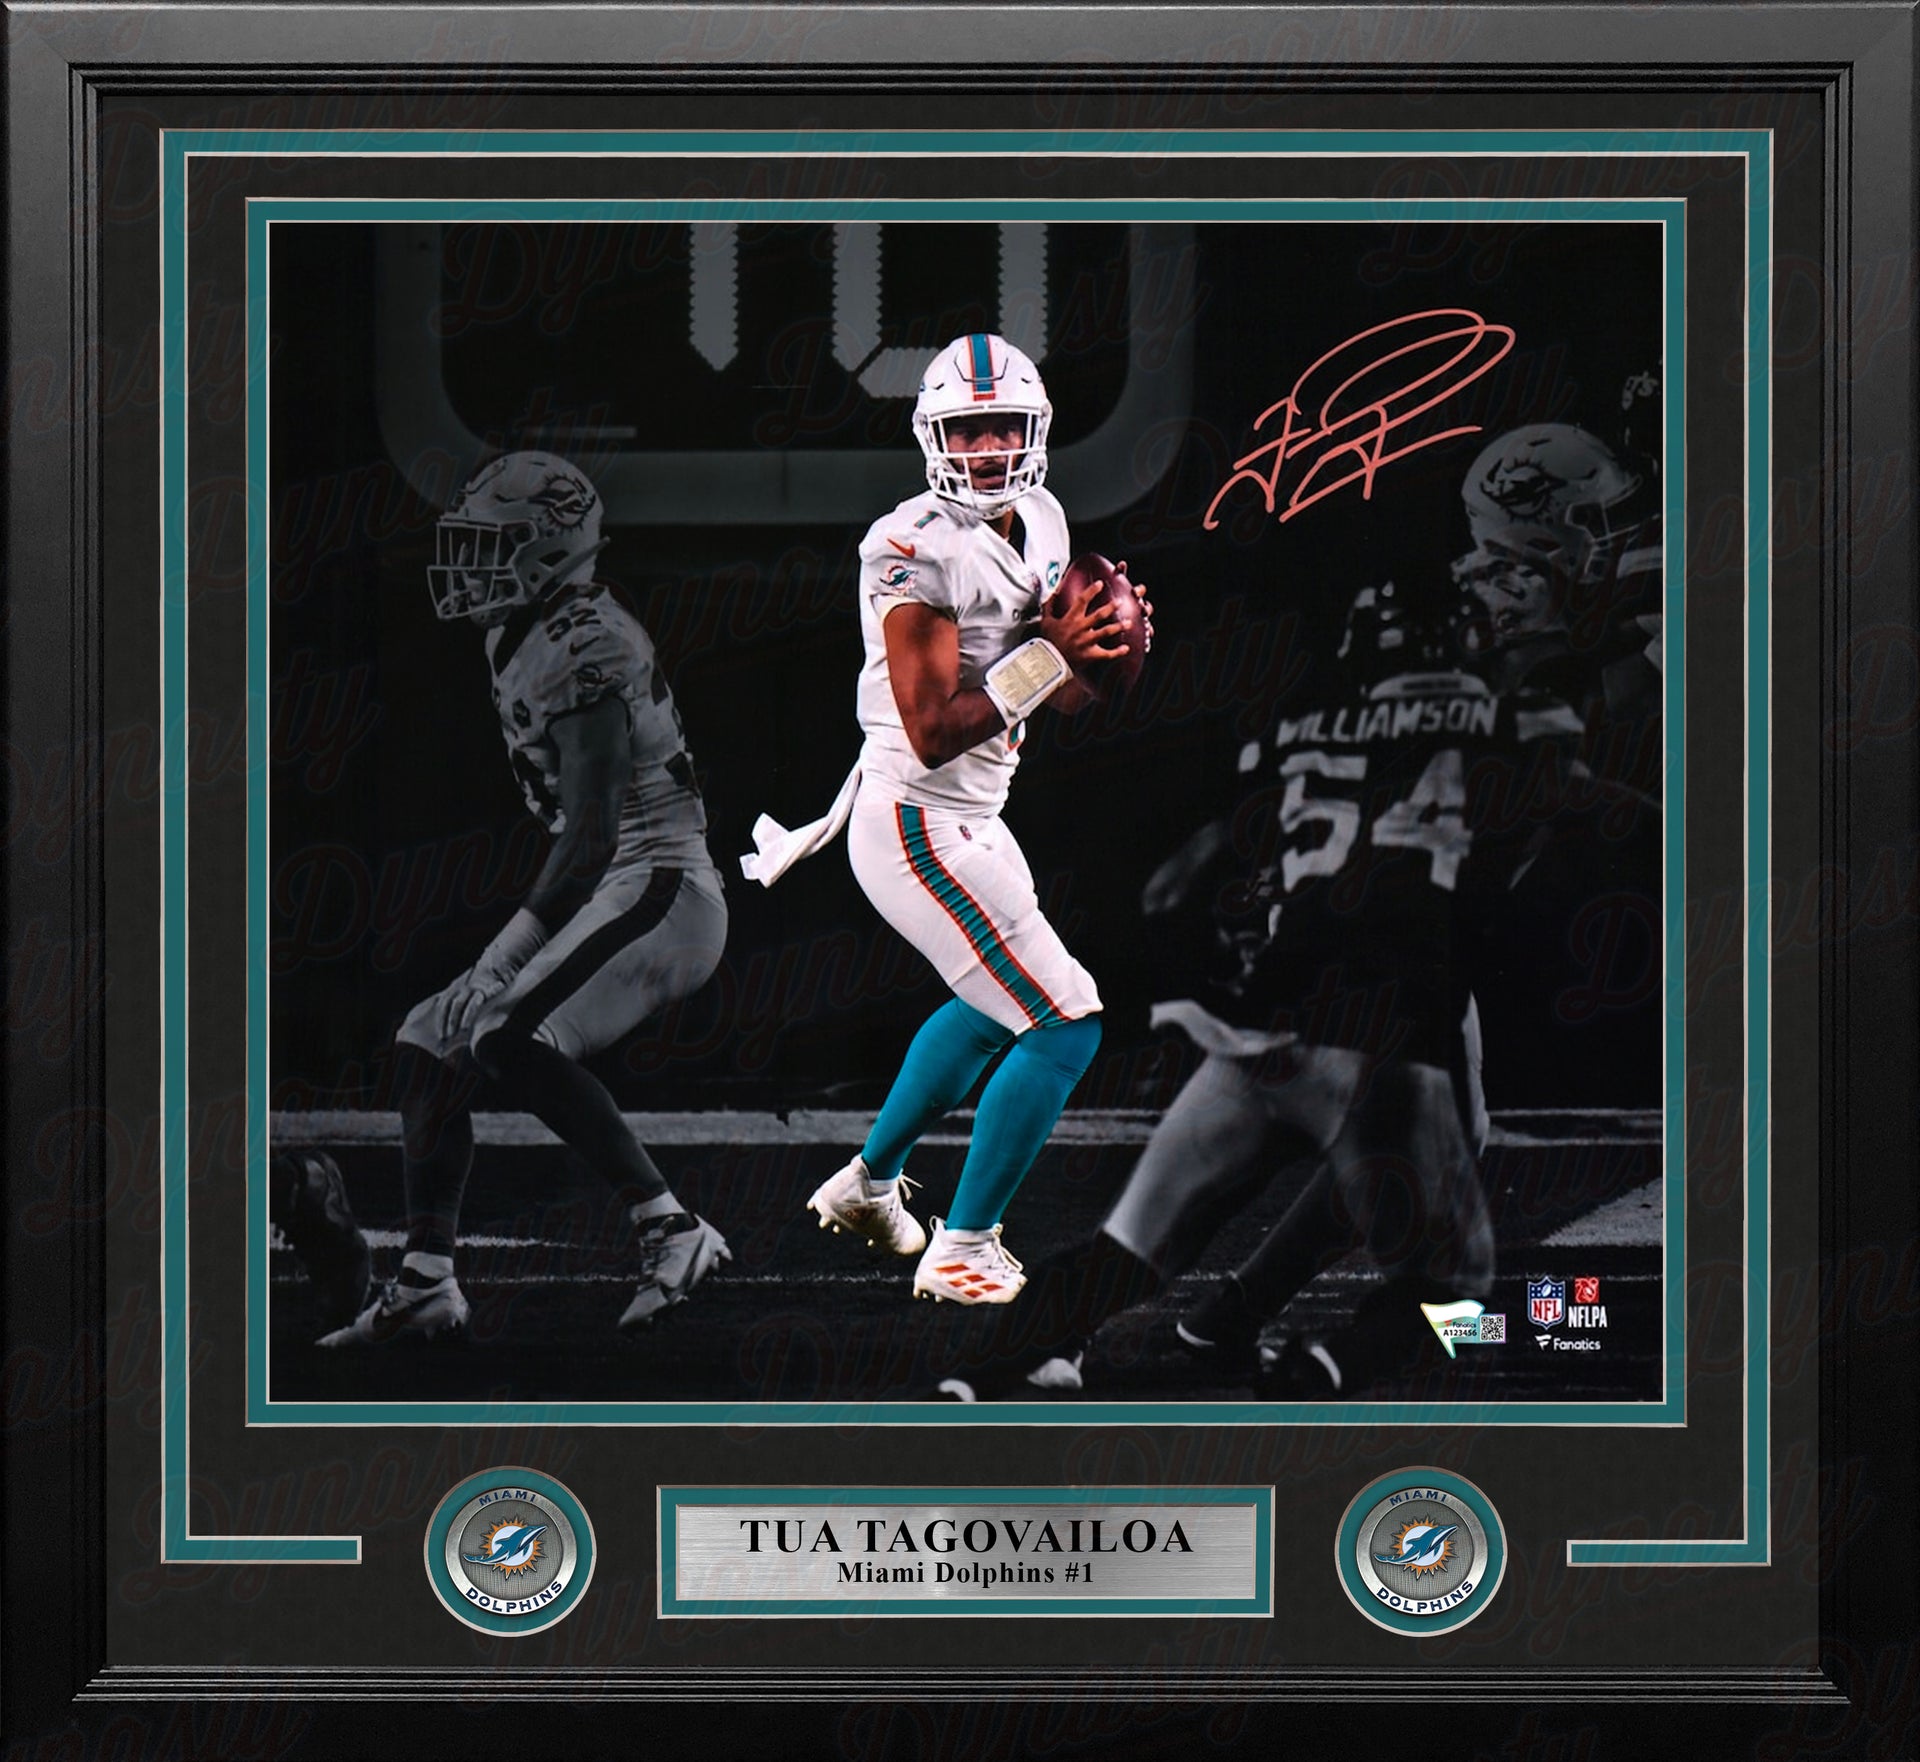 Tua Tagovailoa Miami Dolphins Autographed 11" x 14" Framed Blackout Football Photo - Dynasty Sports & Framing 